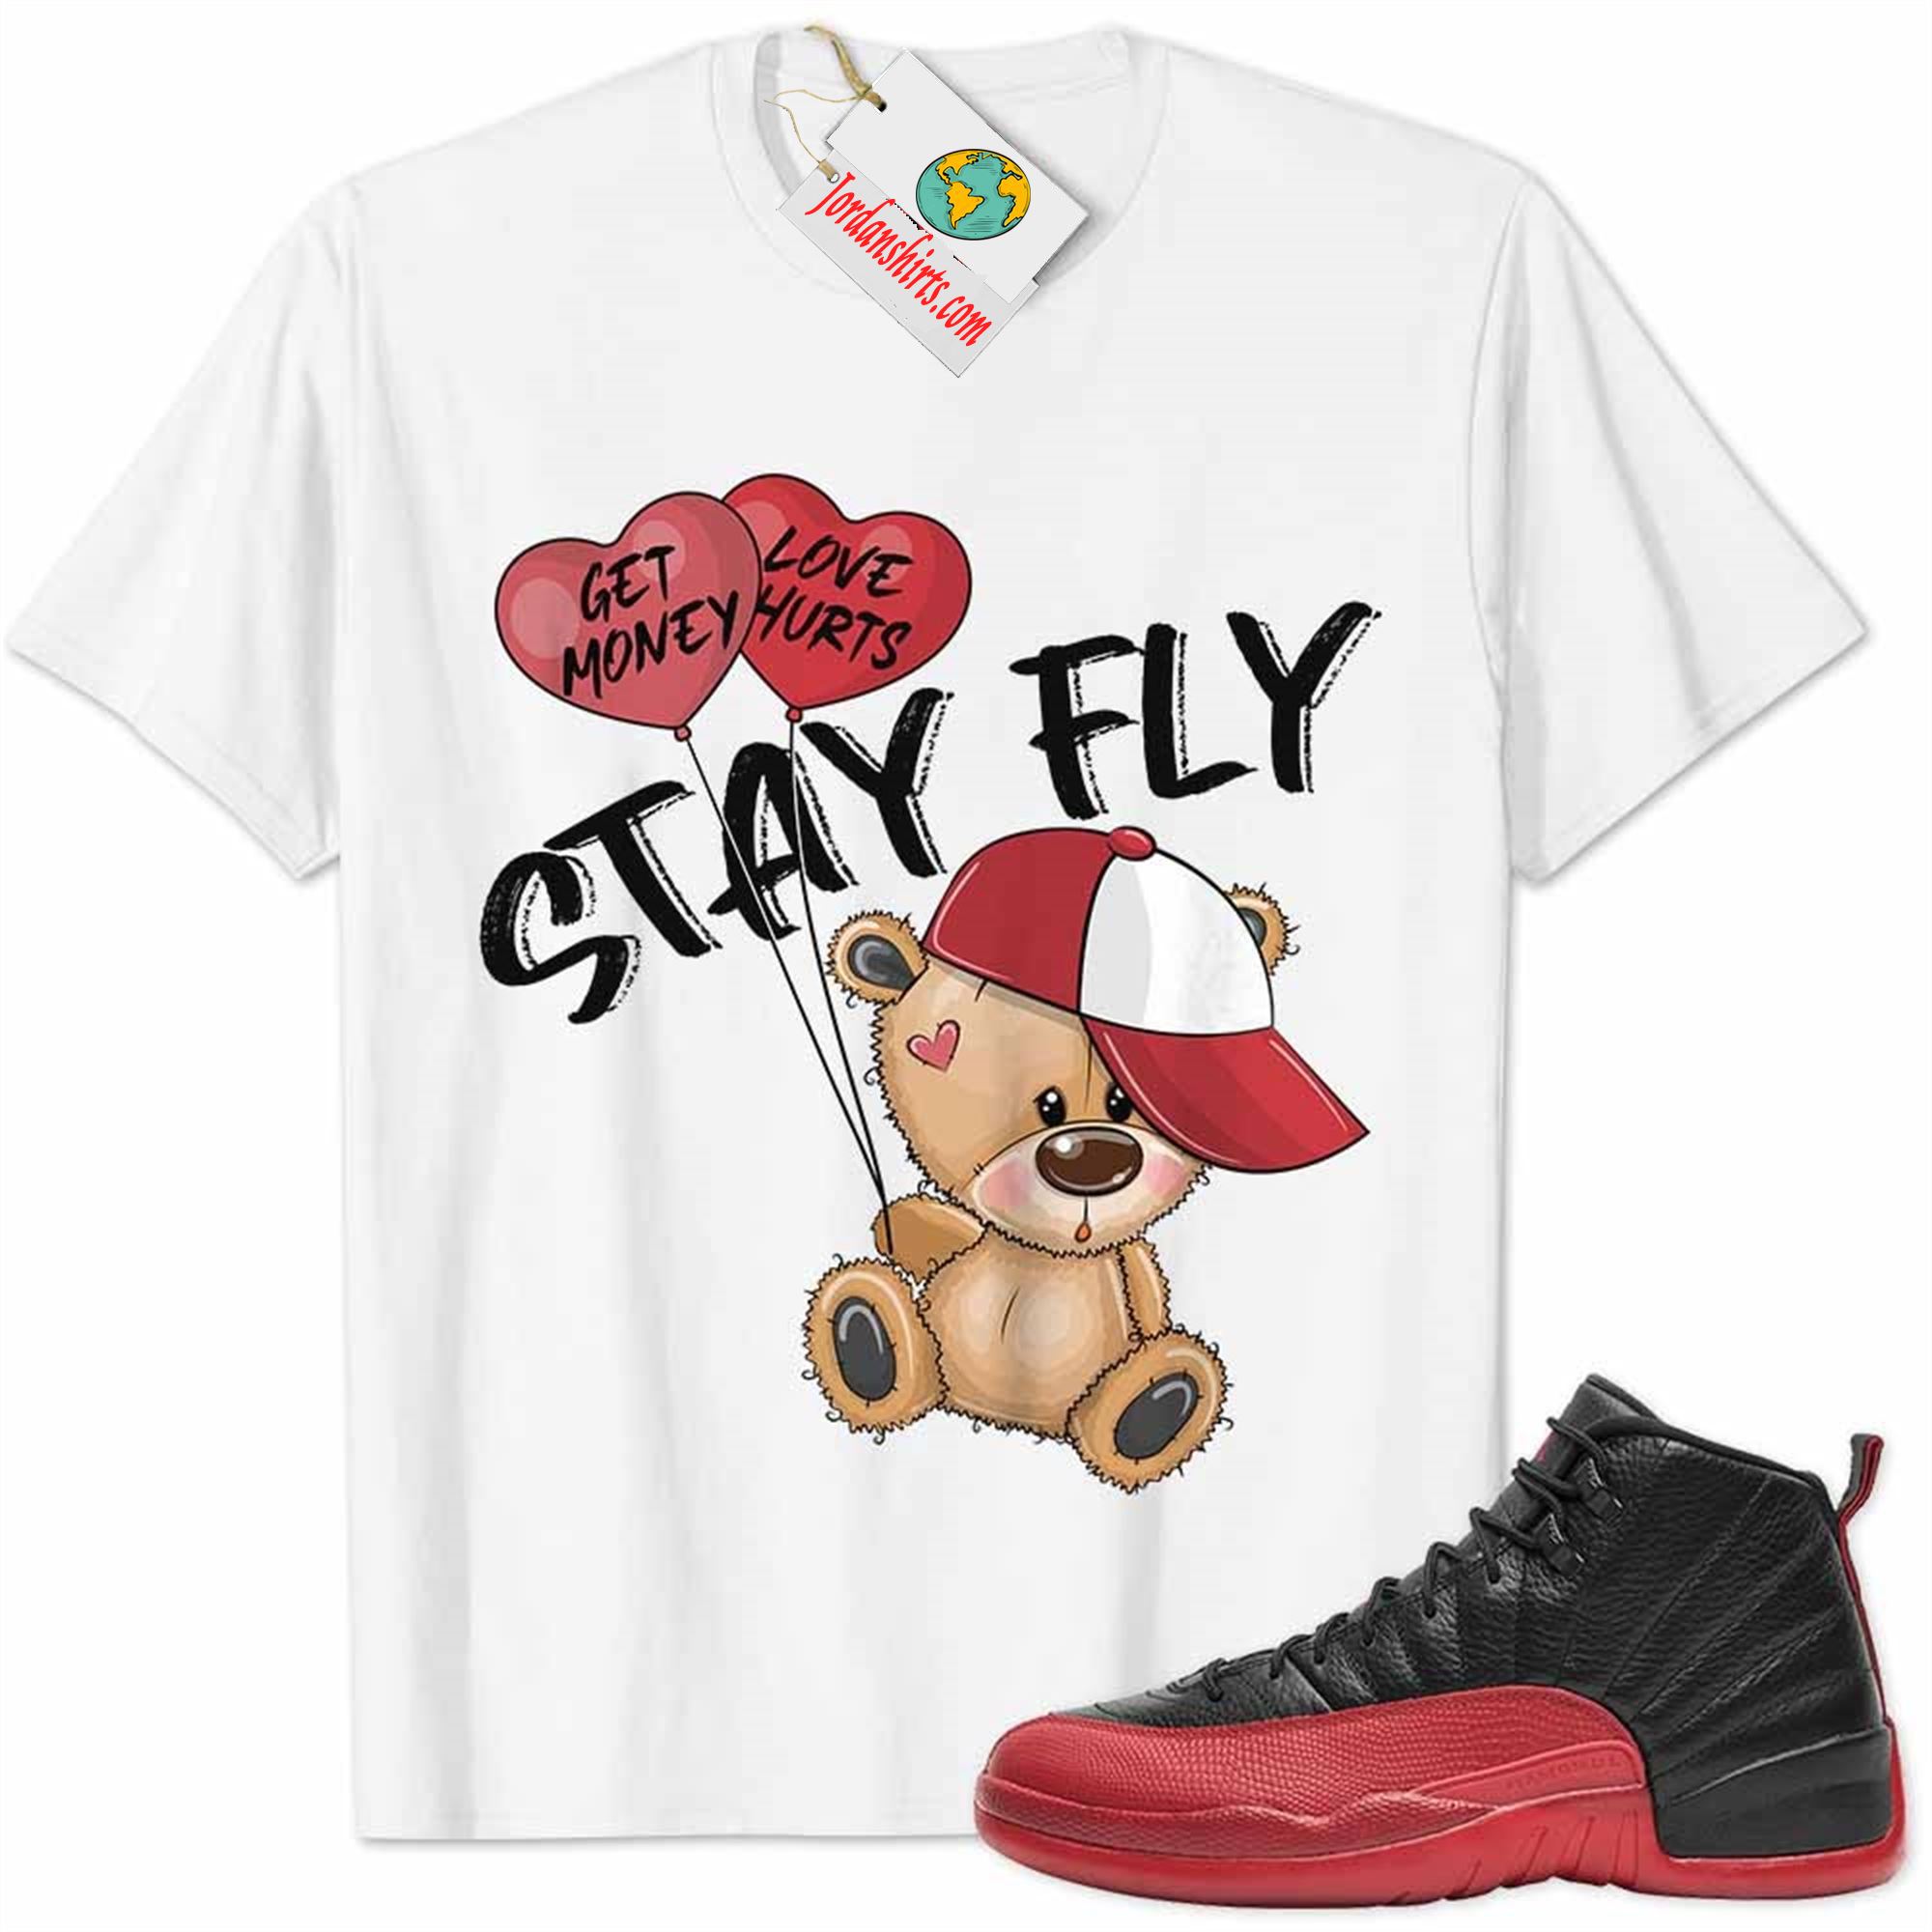 Jordan 12 Shirt, Flu Game 12s Shirt Cute Teddy Bear Stay Fly Get Money White Plus Size Up To 5xl